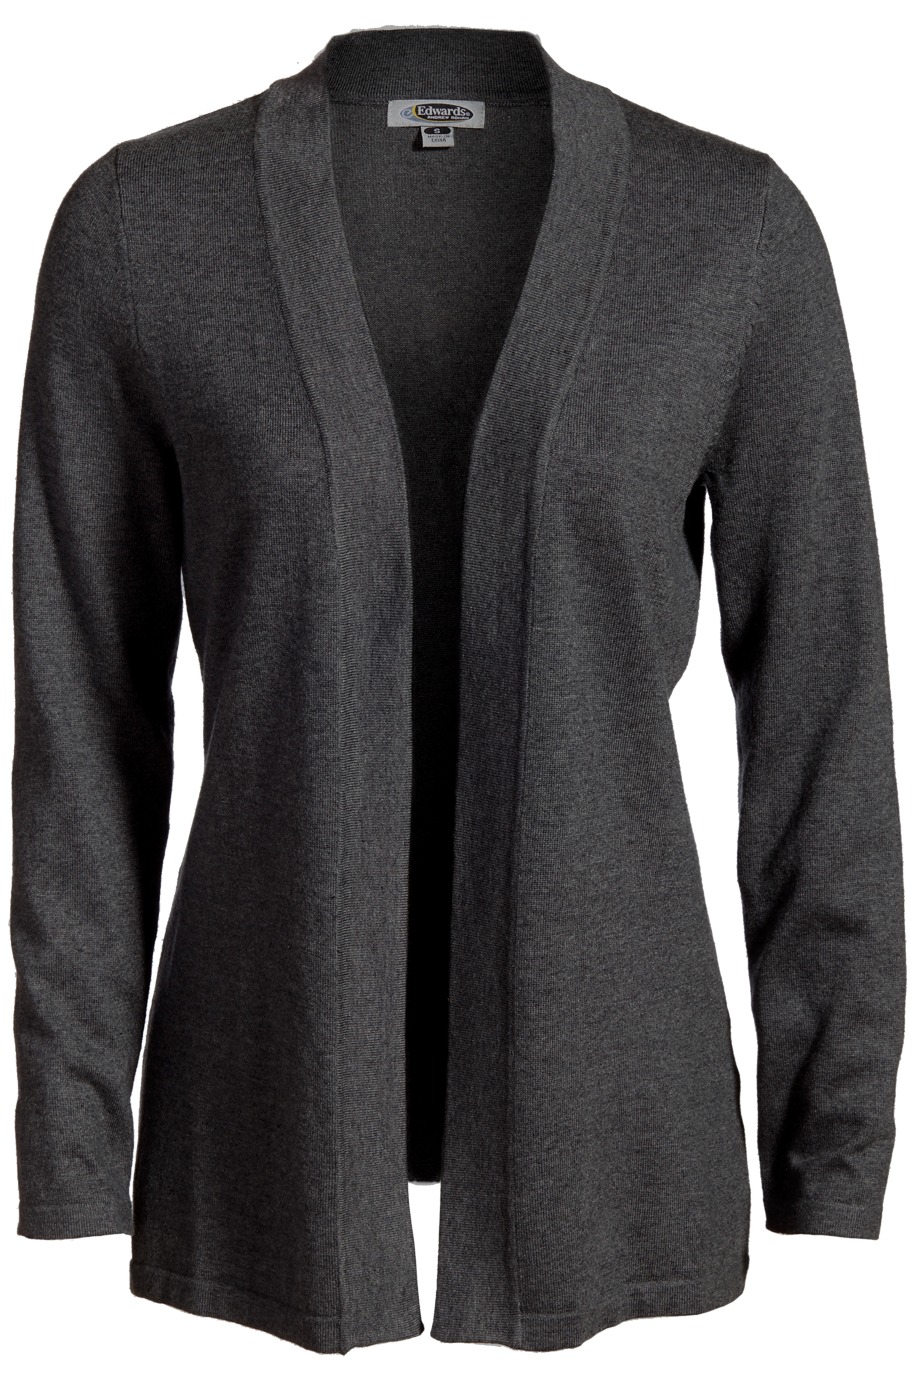 Edwards Garment 7056 - Women's Open Front Cardigan $24.56 - Sweater